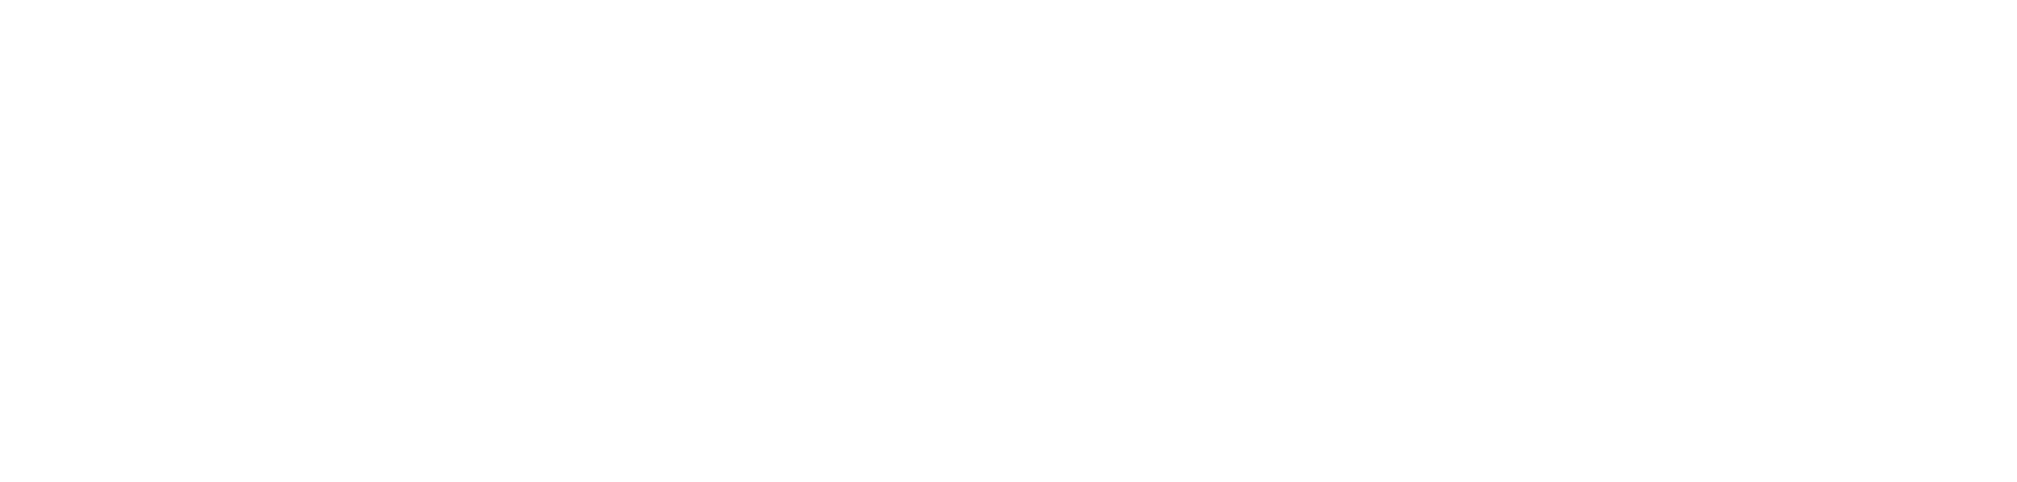 Ashoka University | Young India Fellowship